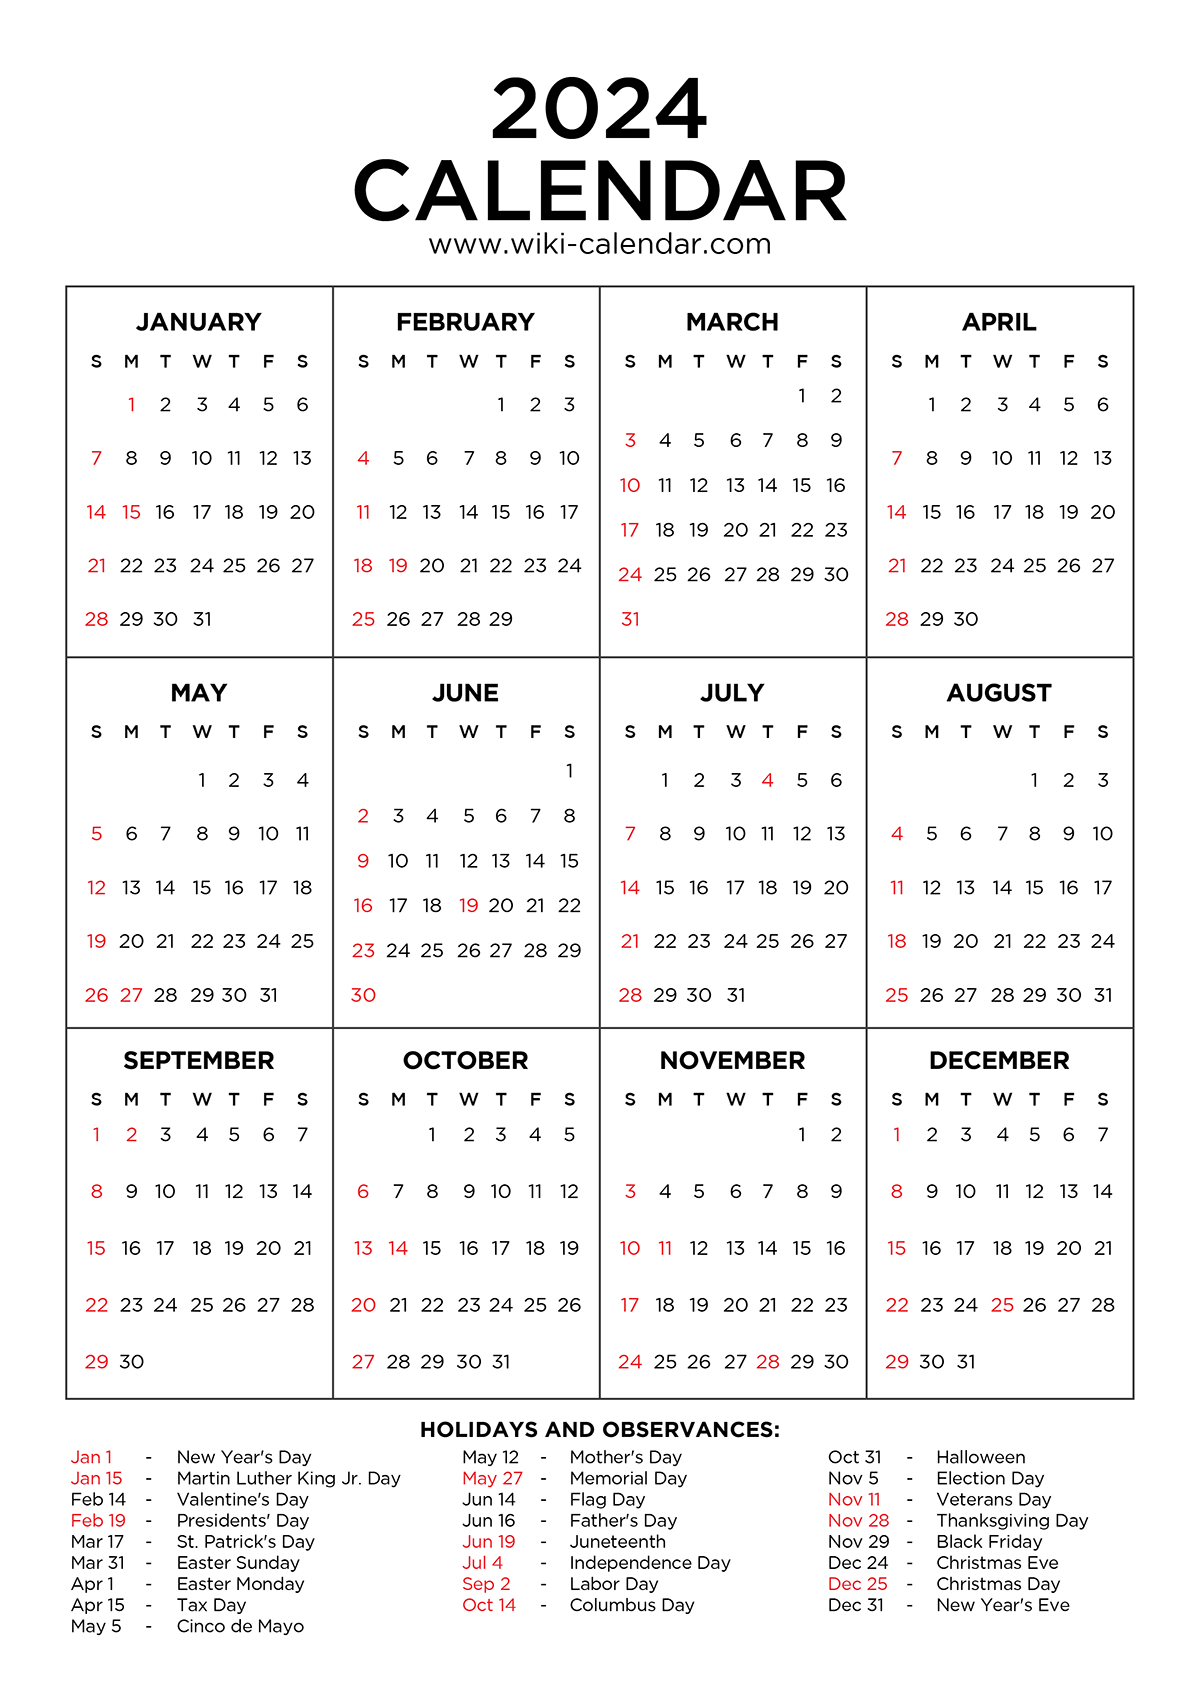 Year 2024 Calendar Printable With Holidays - Wiki Calendar | Free Calendar Printable 2024